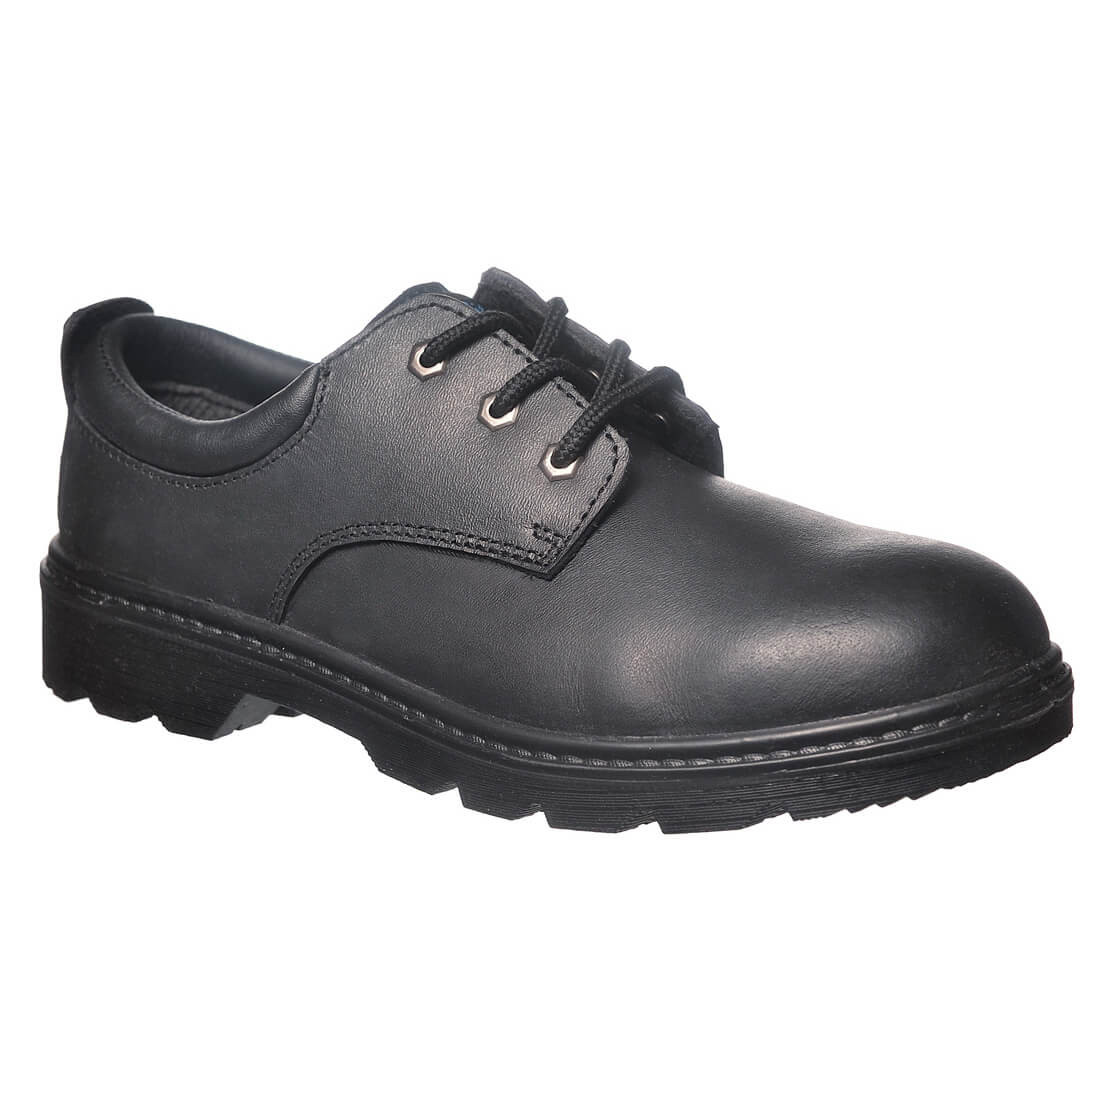 Pantof Steelite™ Thor S3 - Incaltaminte de protectie | Bocanci, Pantofi, Sandale, Cizme